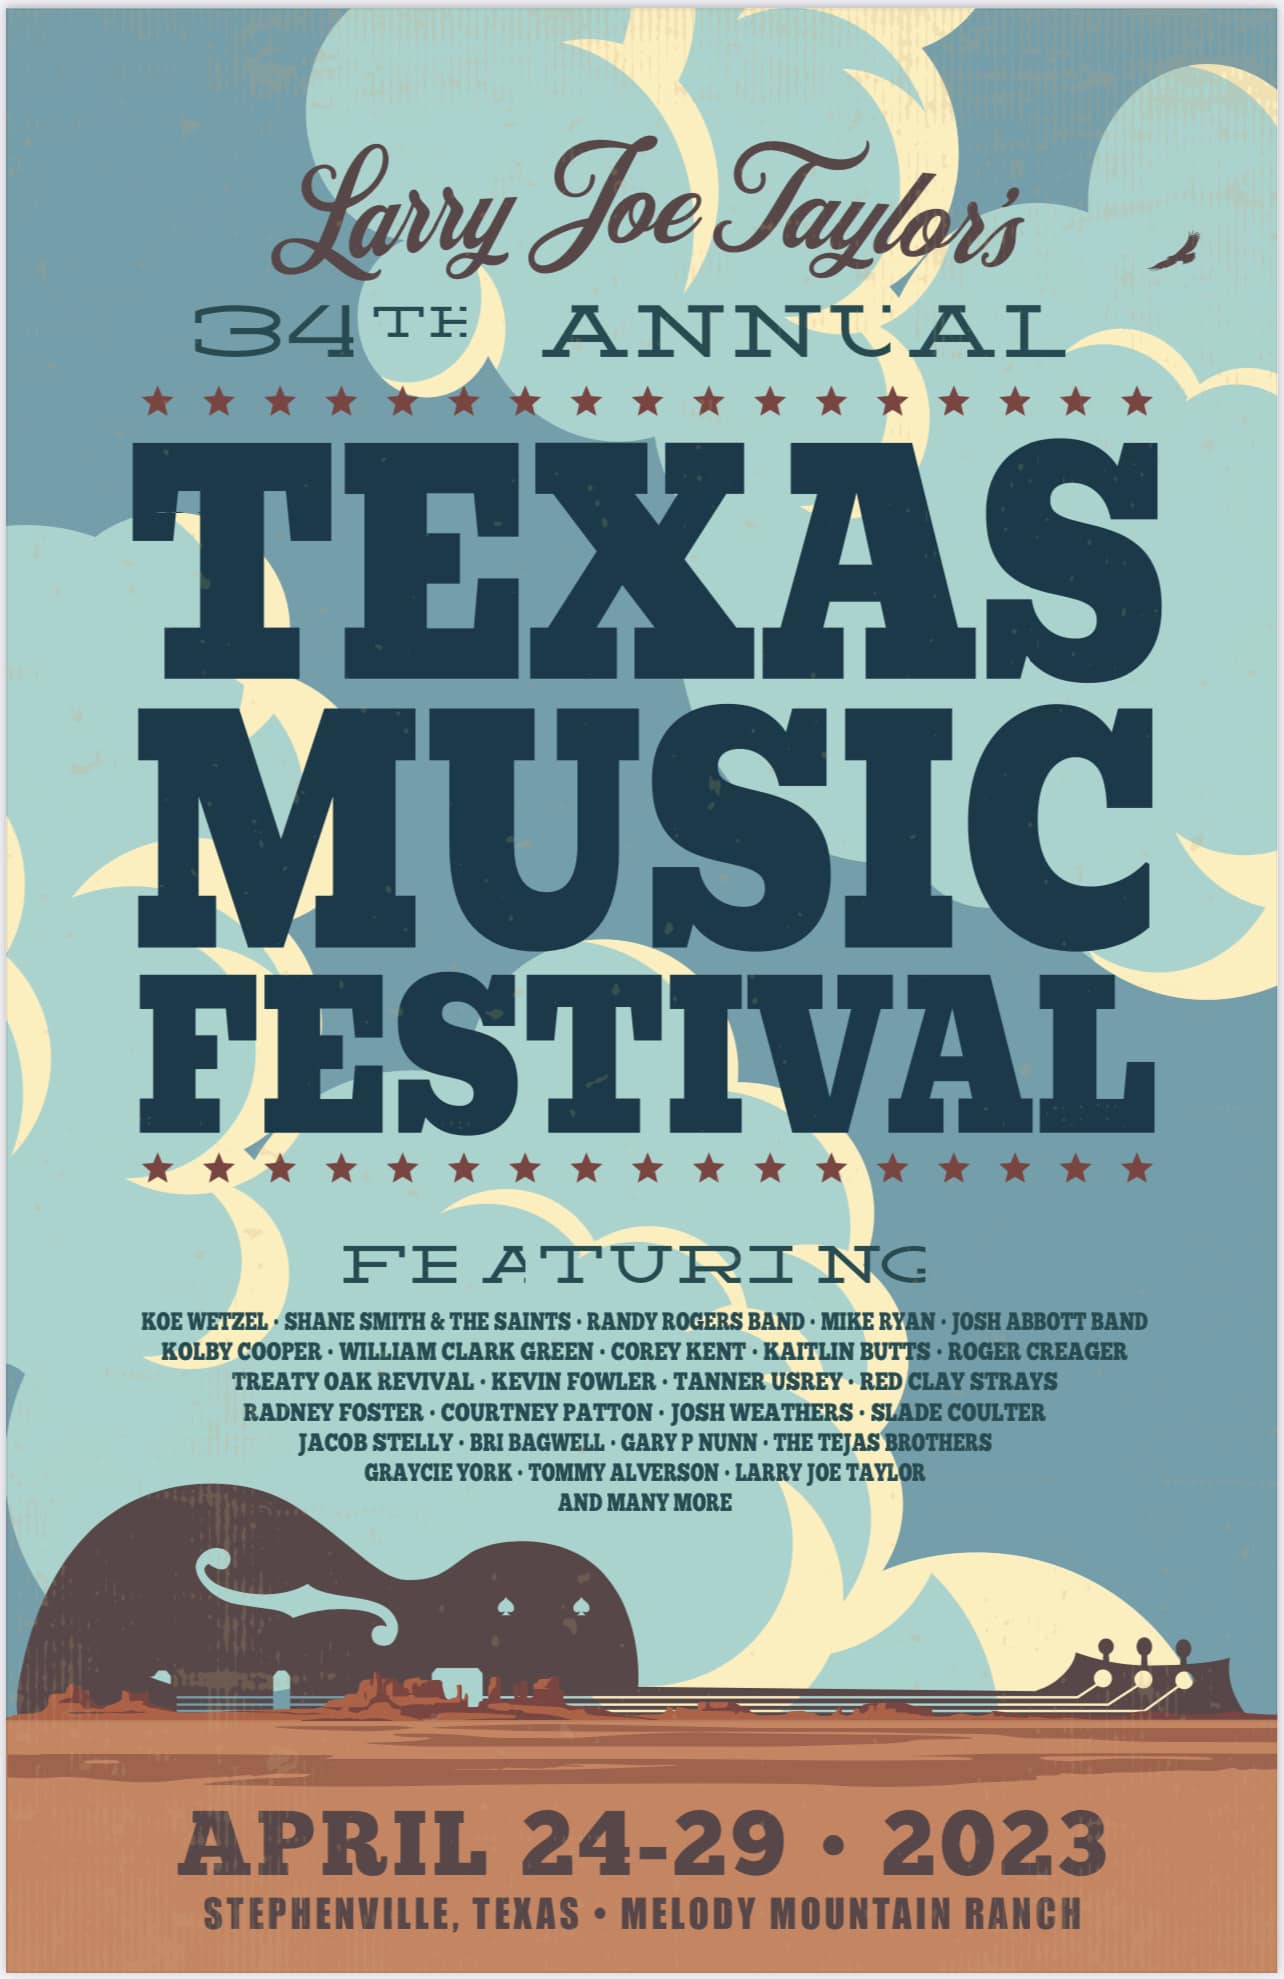 Larry Joe Taylor's 34th Annual Texas Music Festival Stephenville